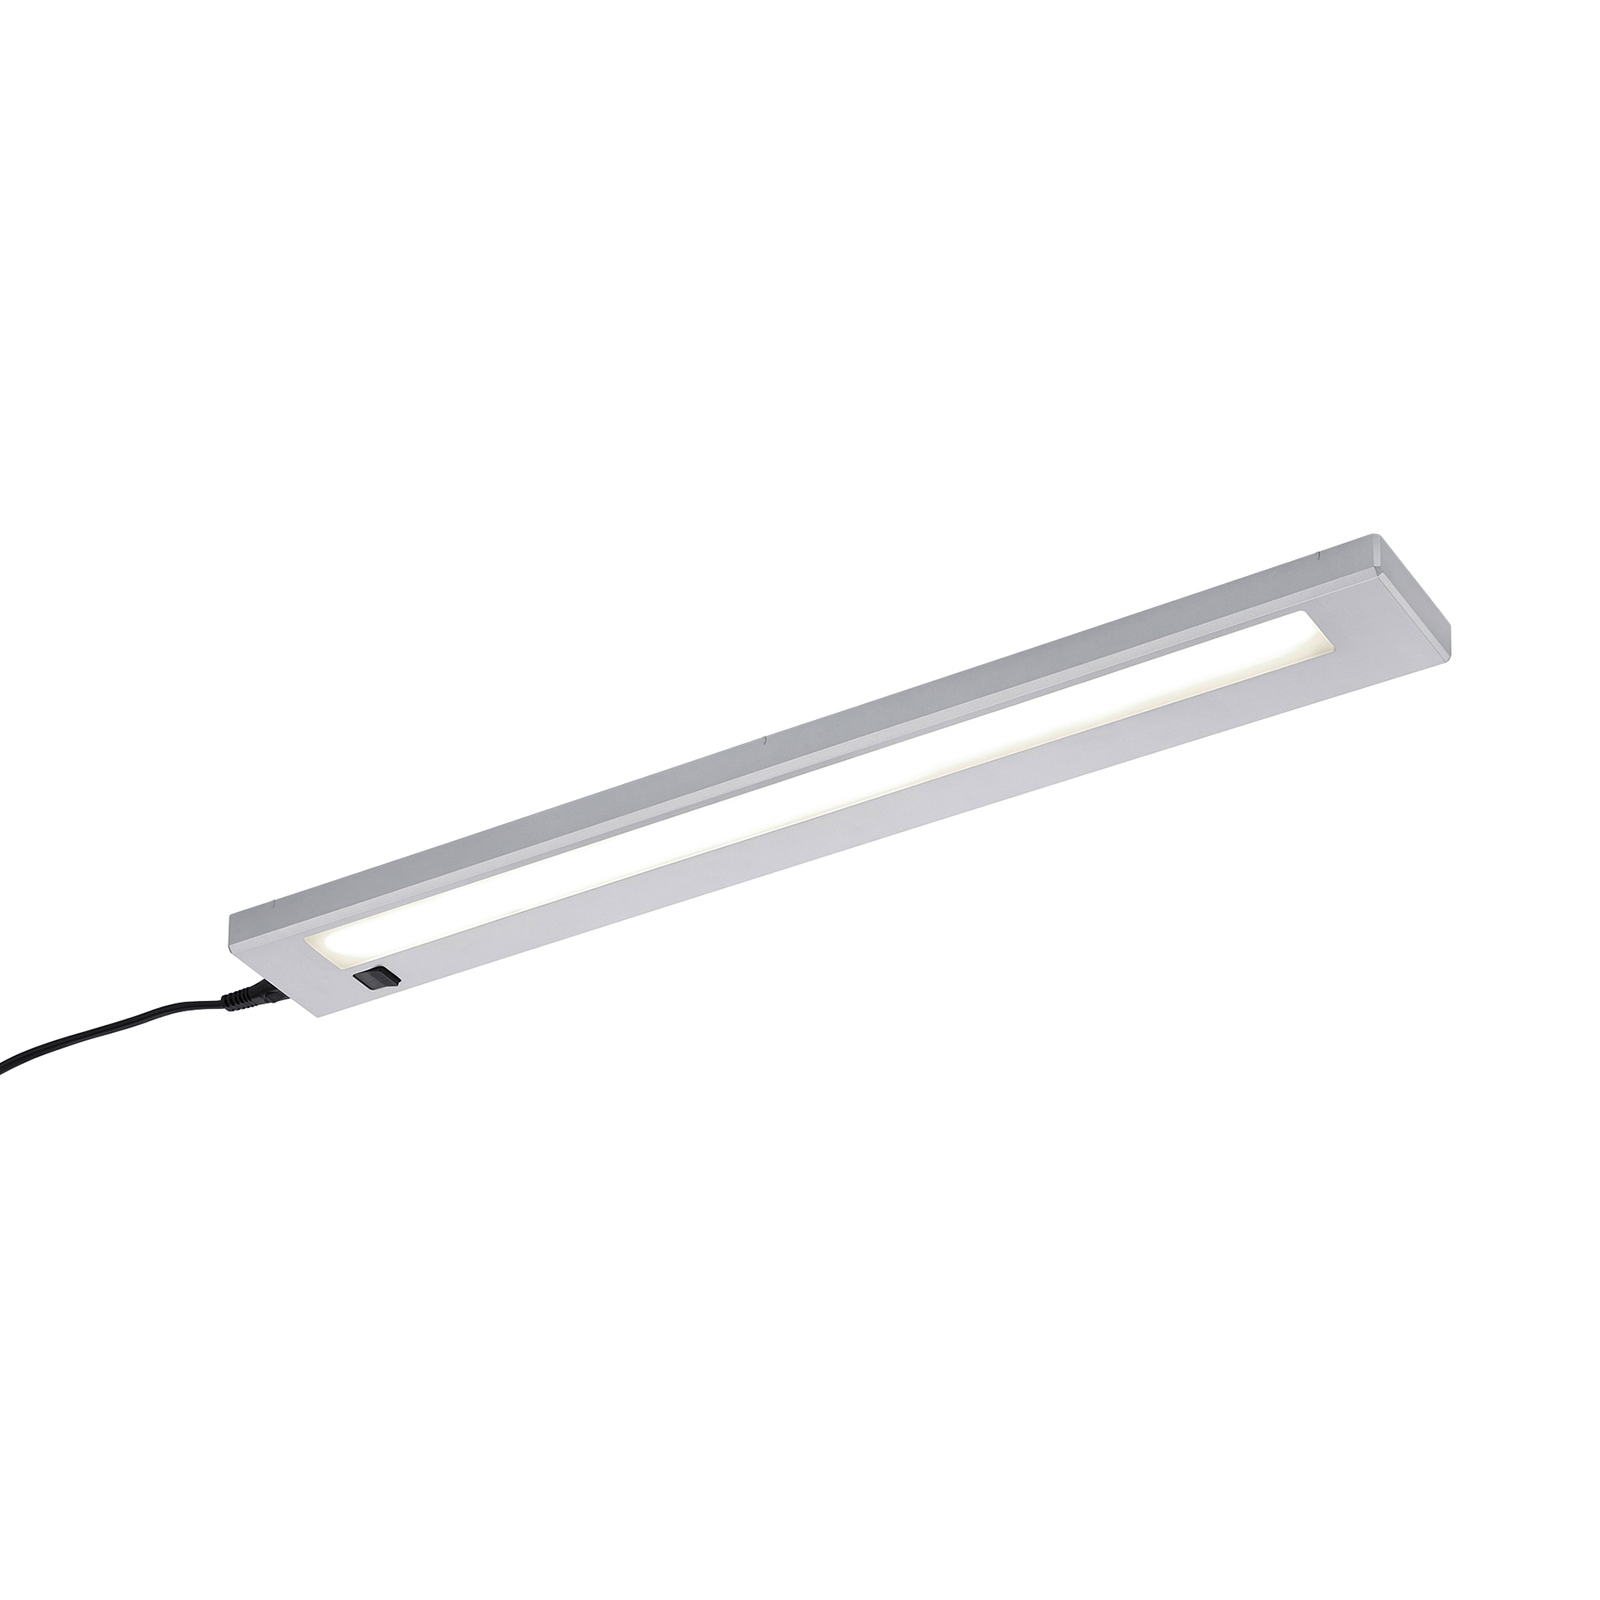 Lampe sous meuble LED Alino titane, longueur 55 cm